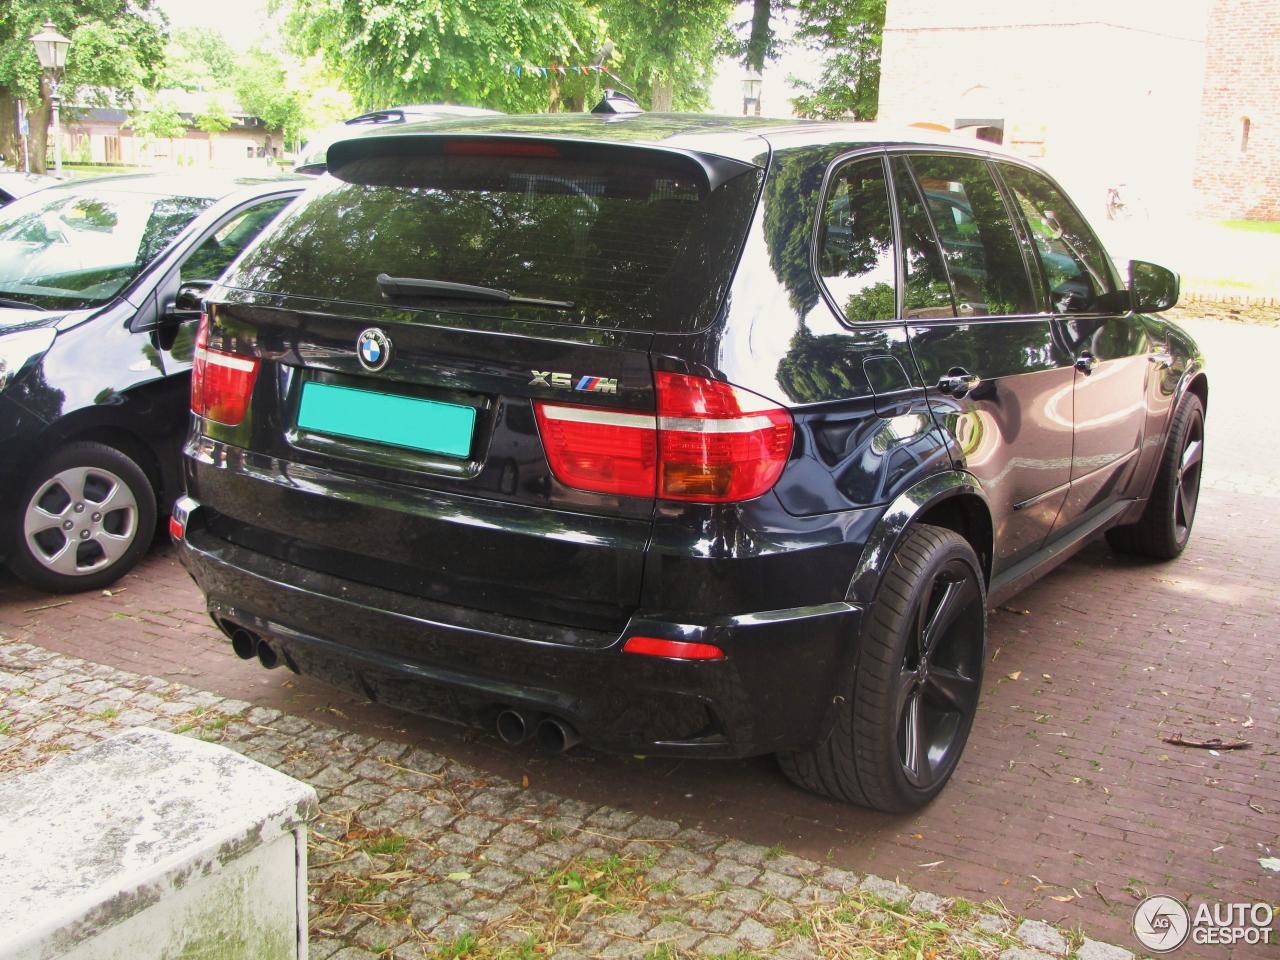 BMW X5 M E70